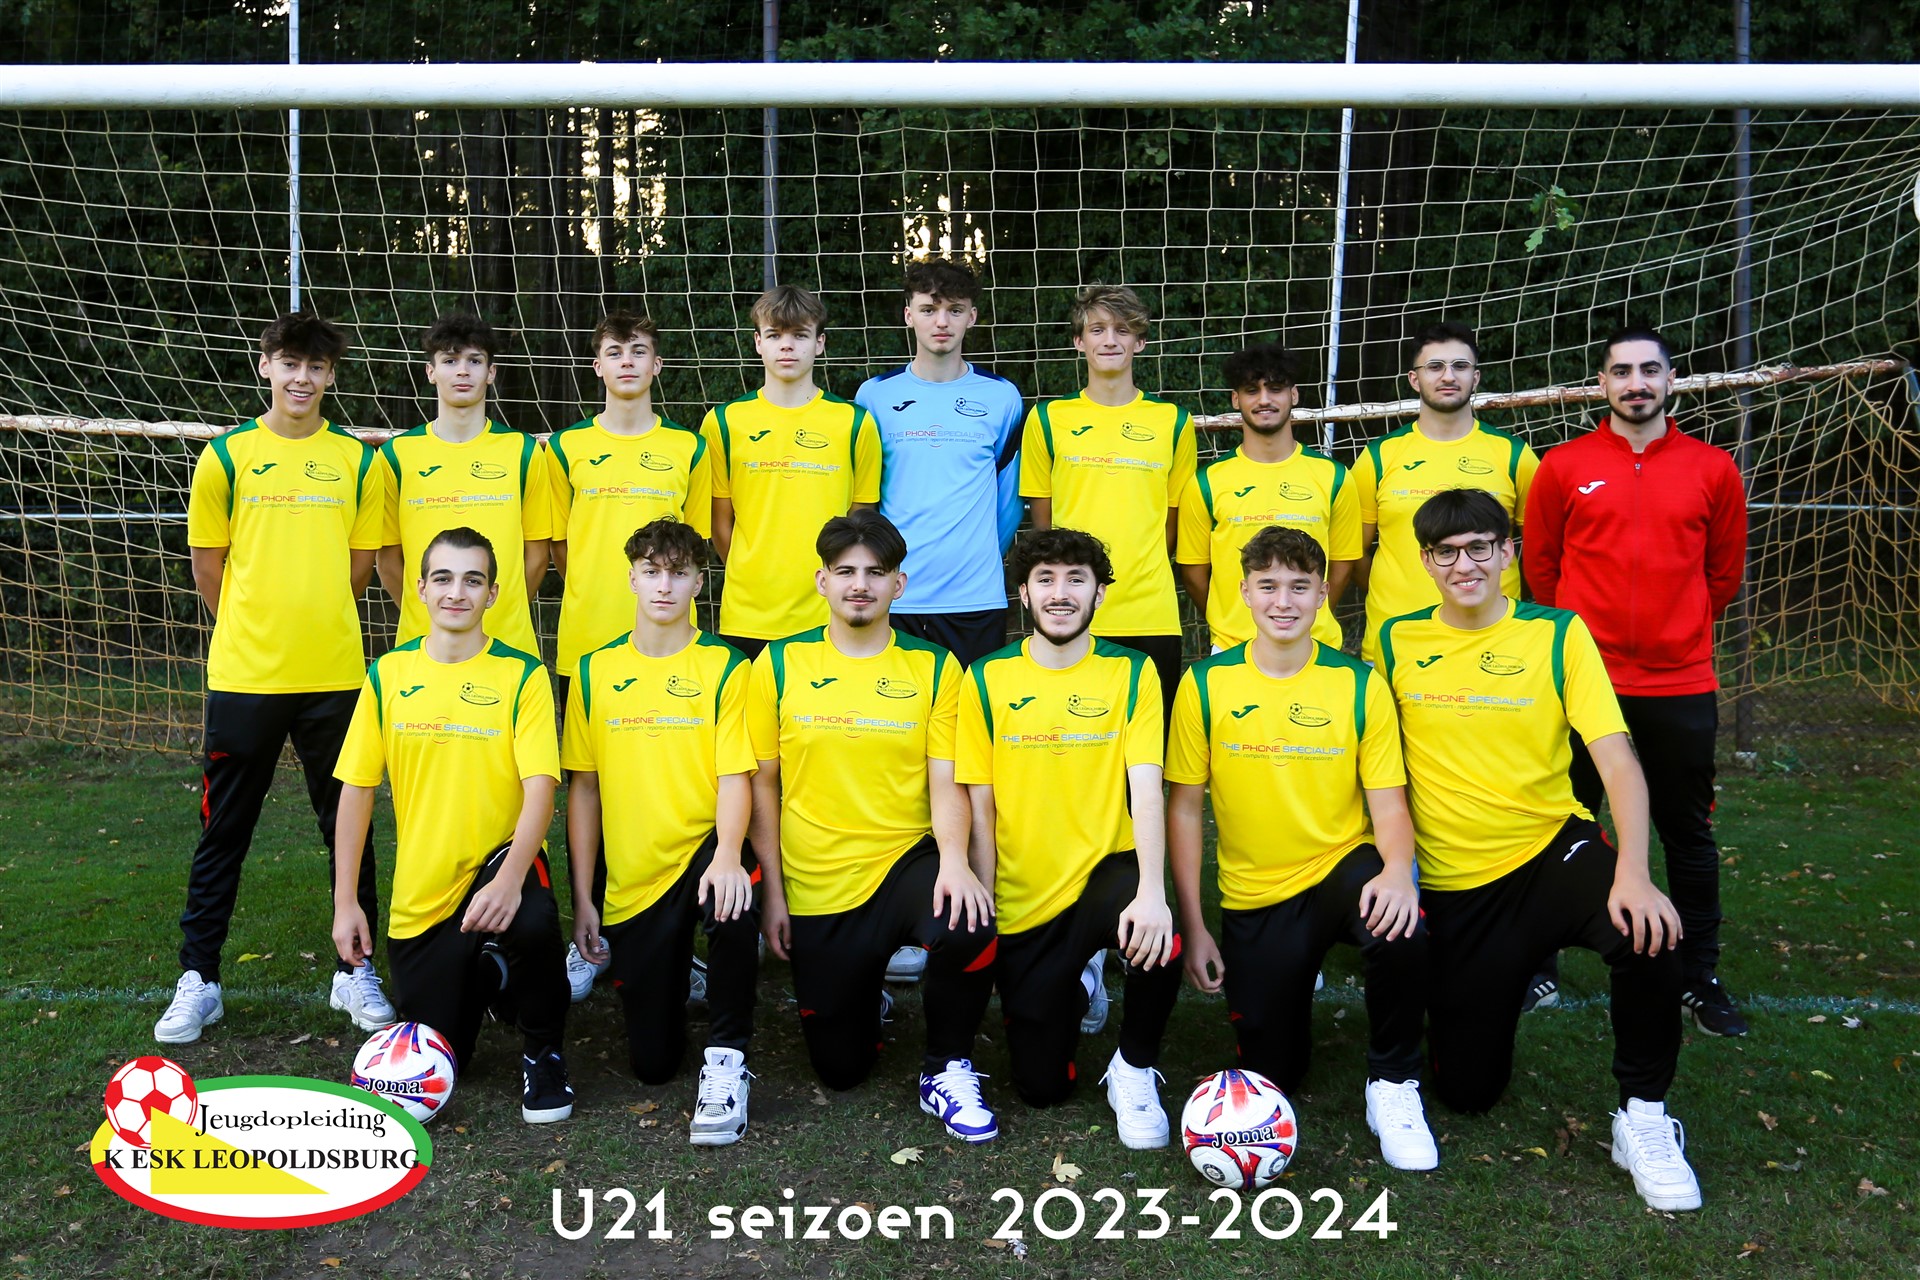 U21 ploegfoto jeugdopleiding voetbalclub K.ESK Leopoldsburg